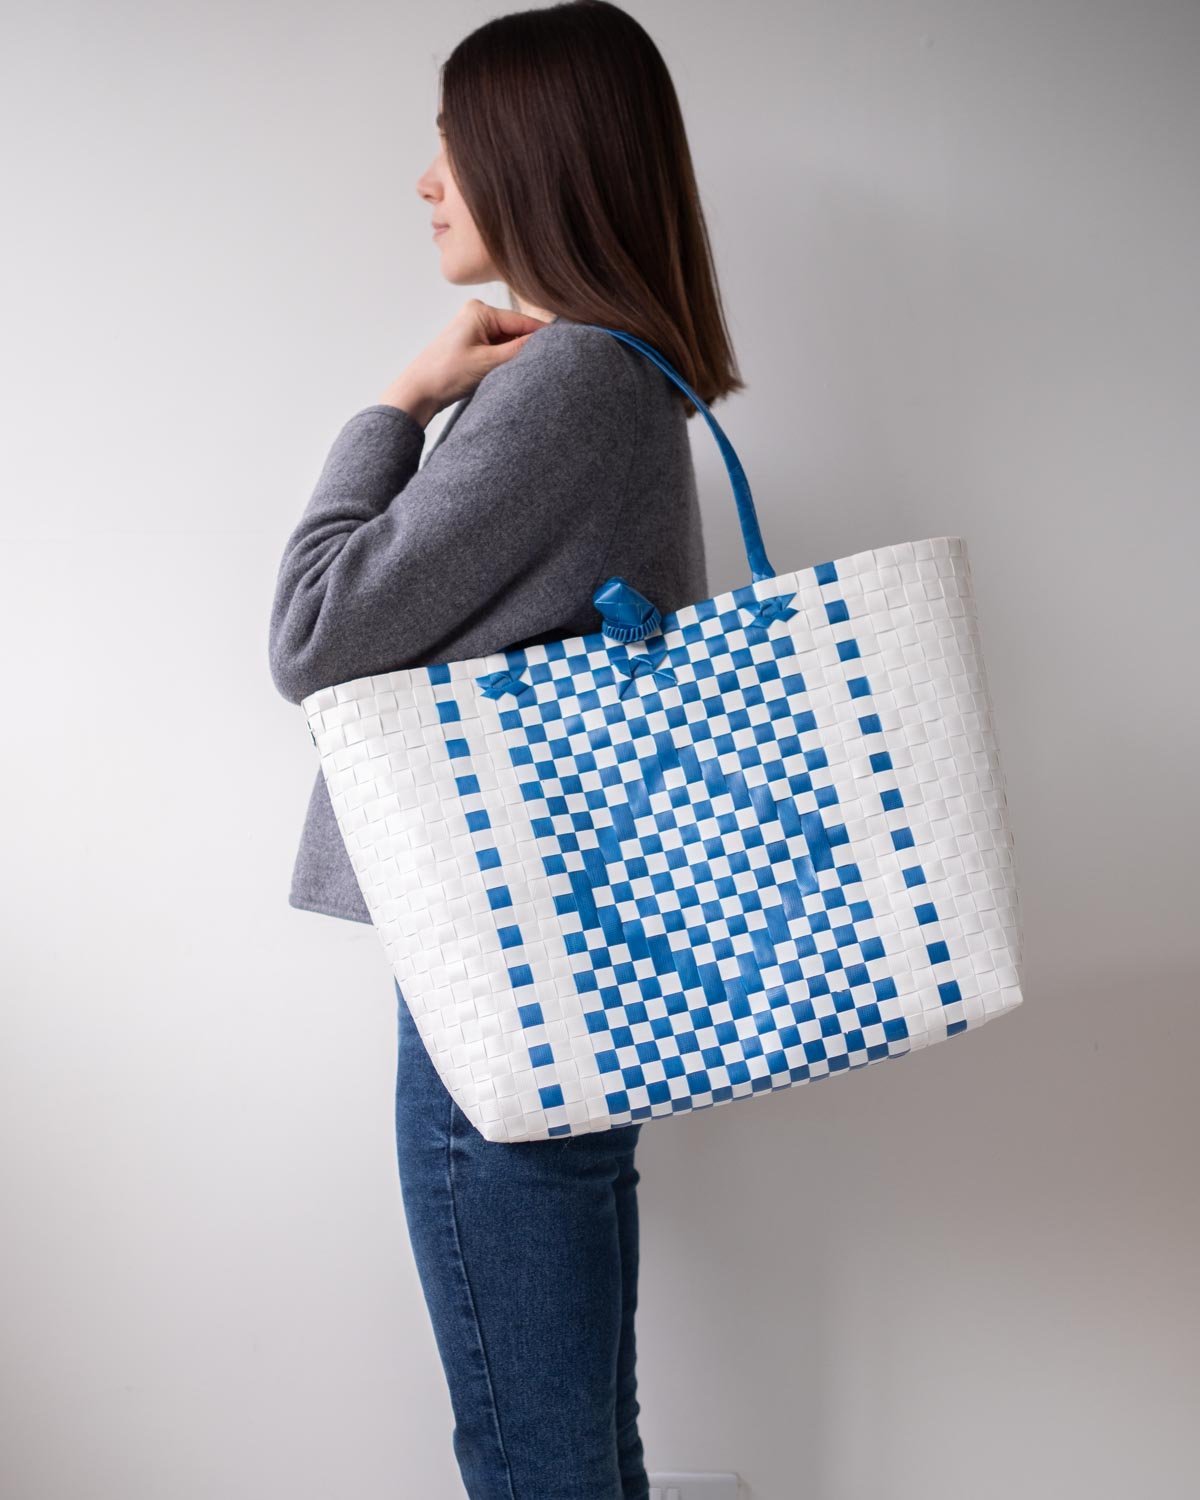 Blue Diamond Design Woven Tote Summer Bag, Handmade Baskets